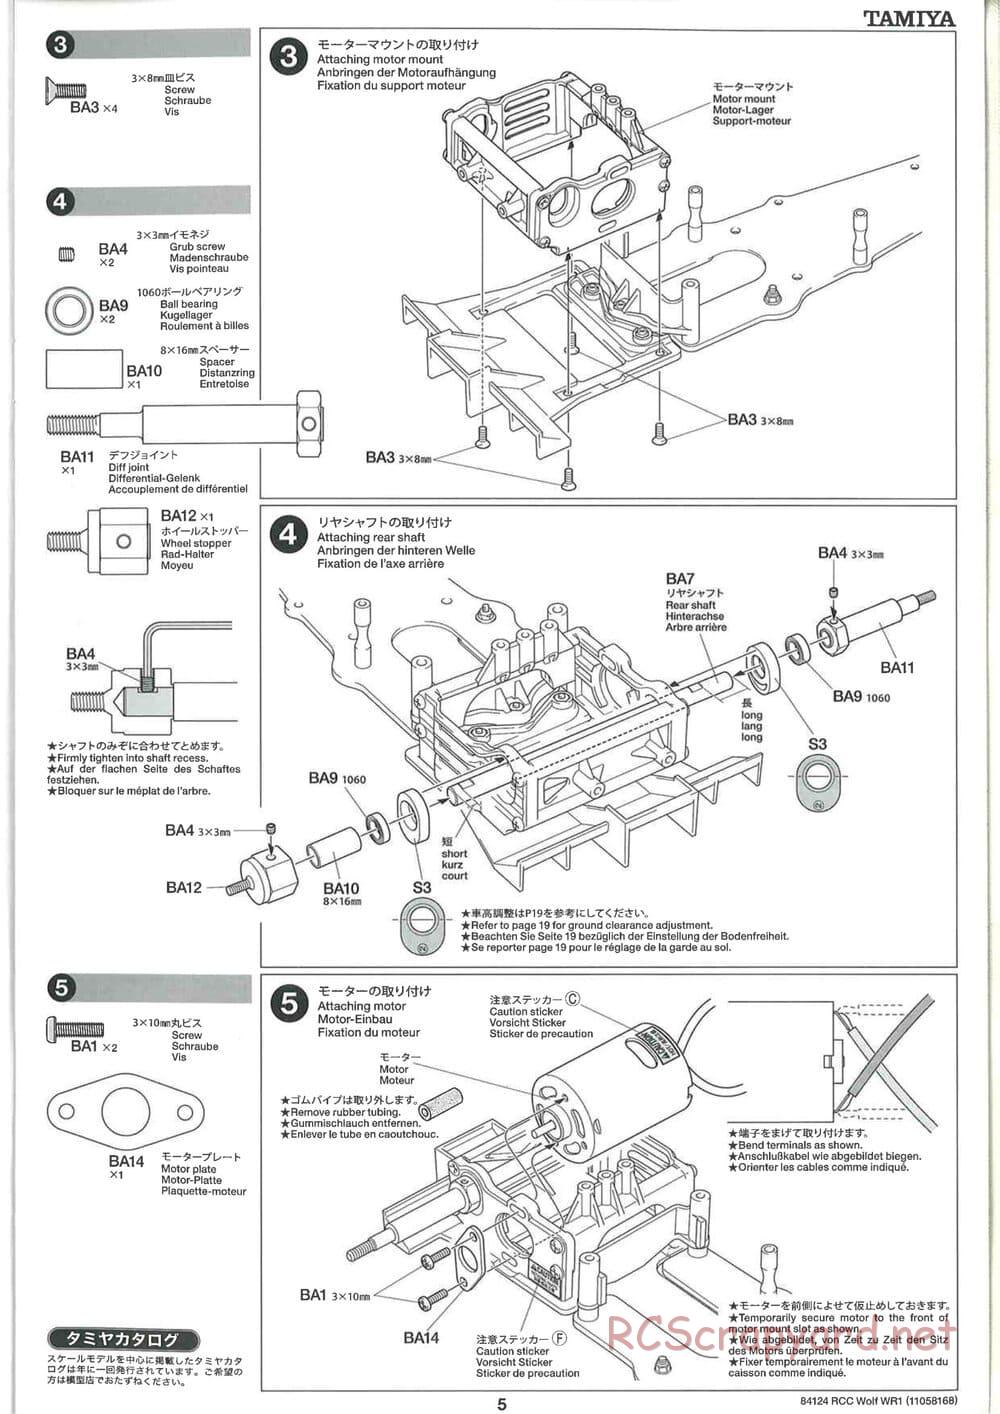 Tamiya - Wolf WR1 - F104W Chassis - Manual - Page 5